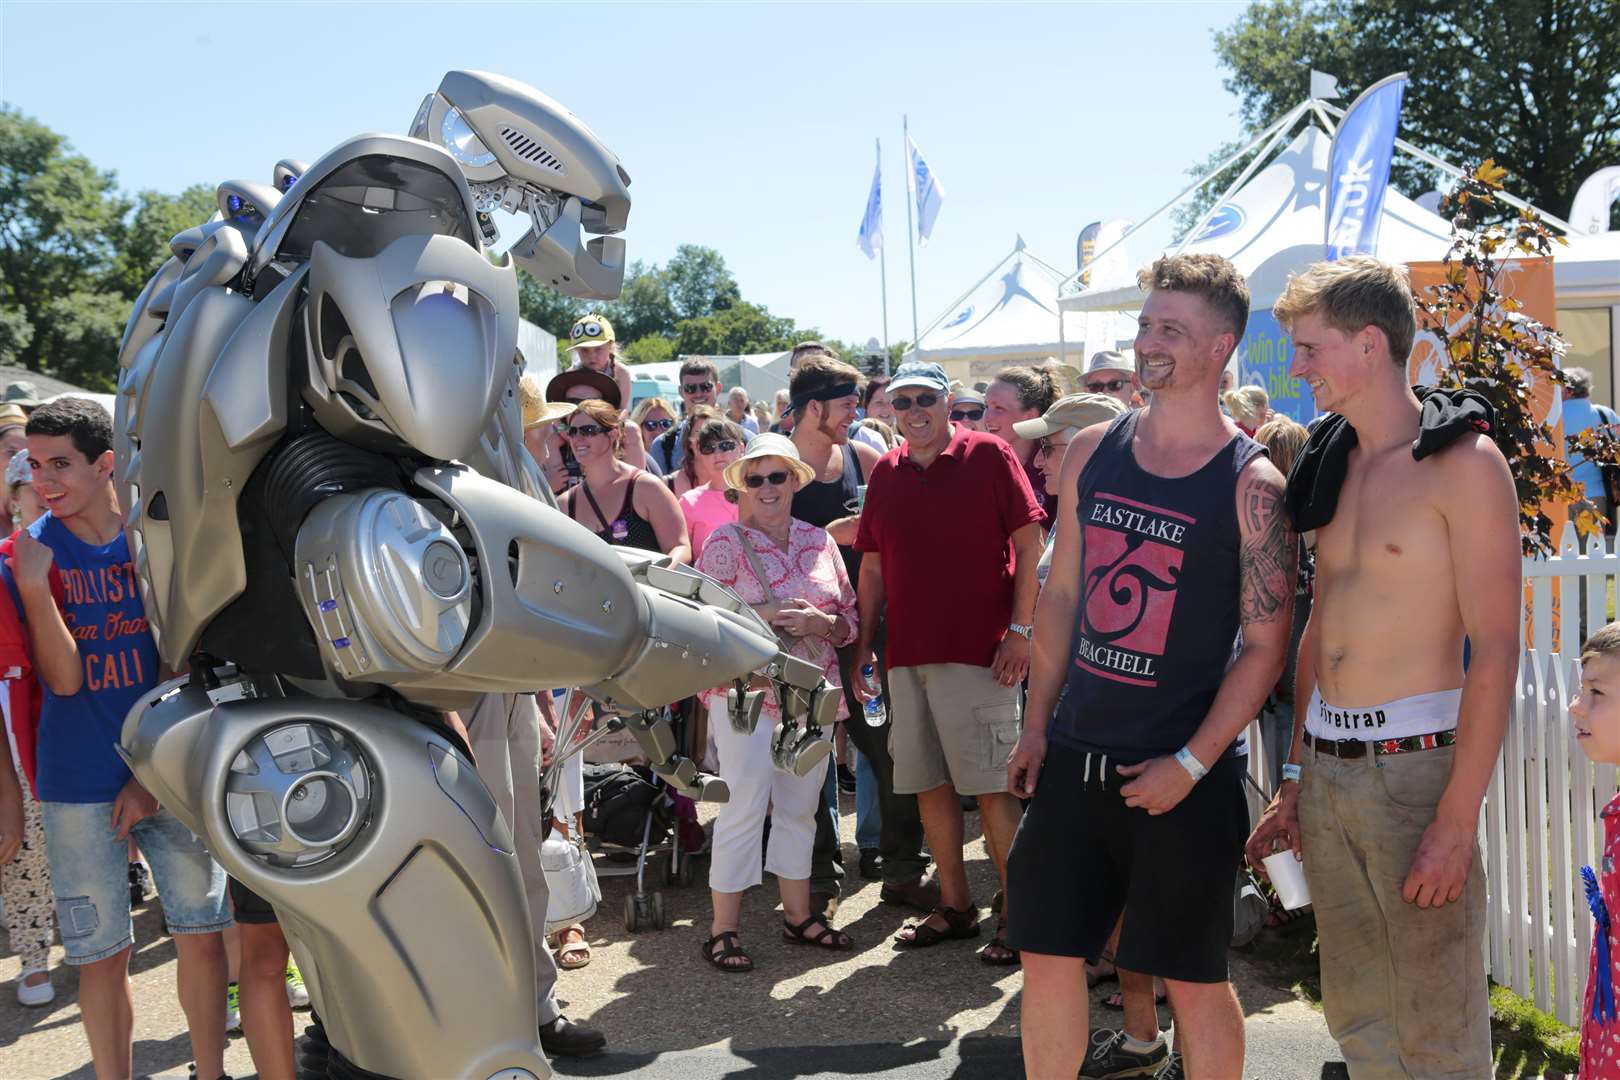 Titan the robot entertains crowds